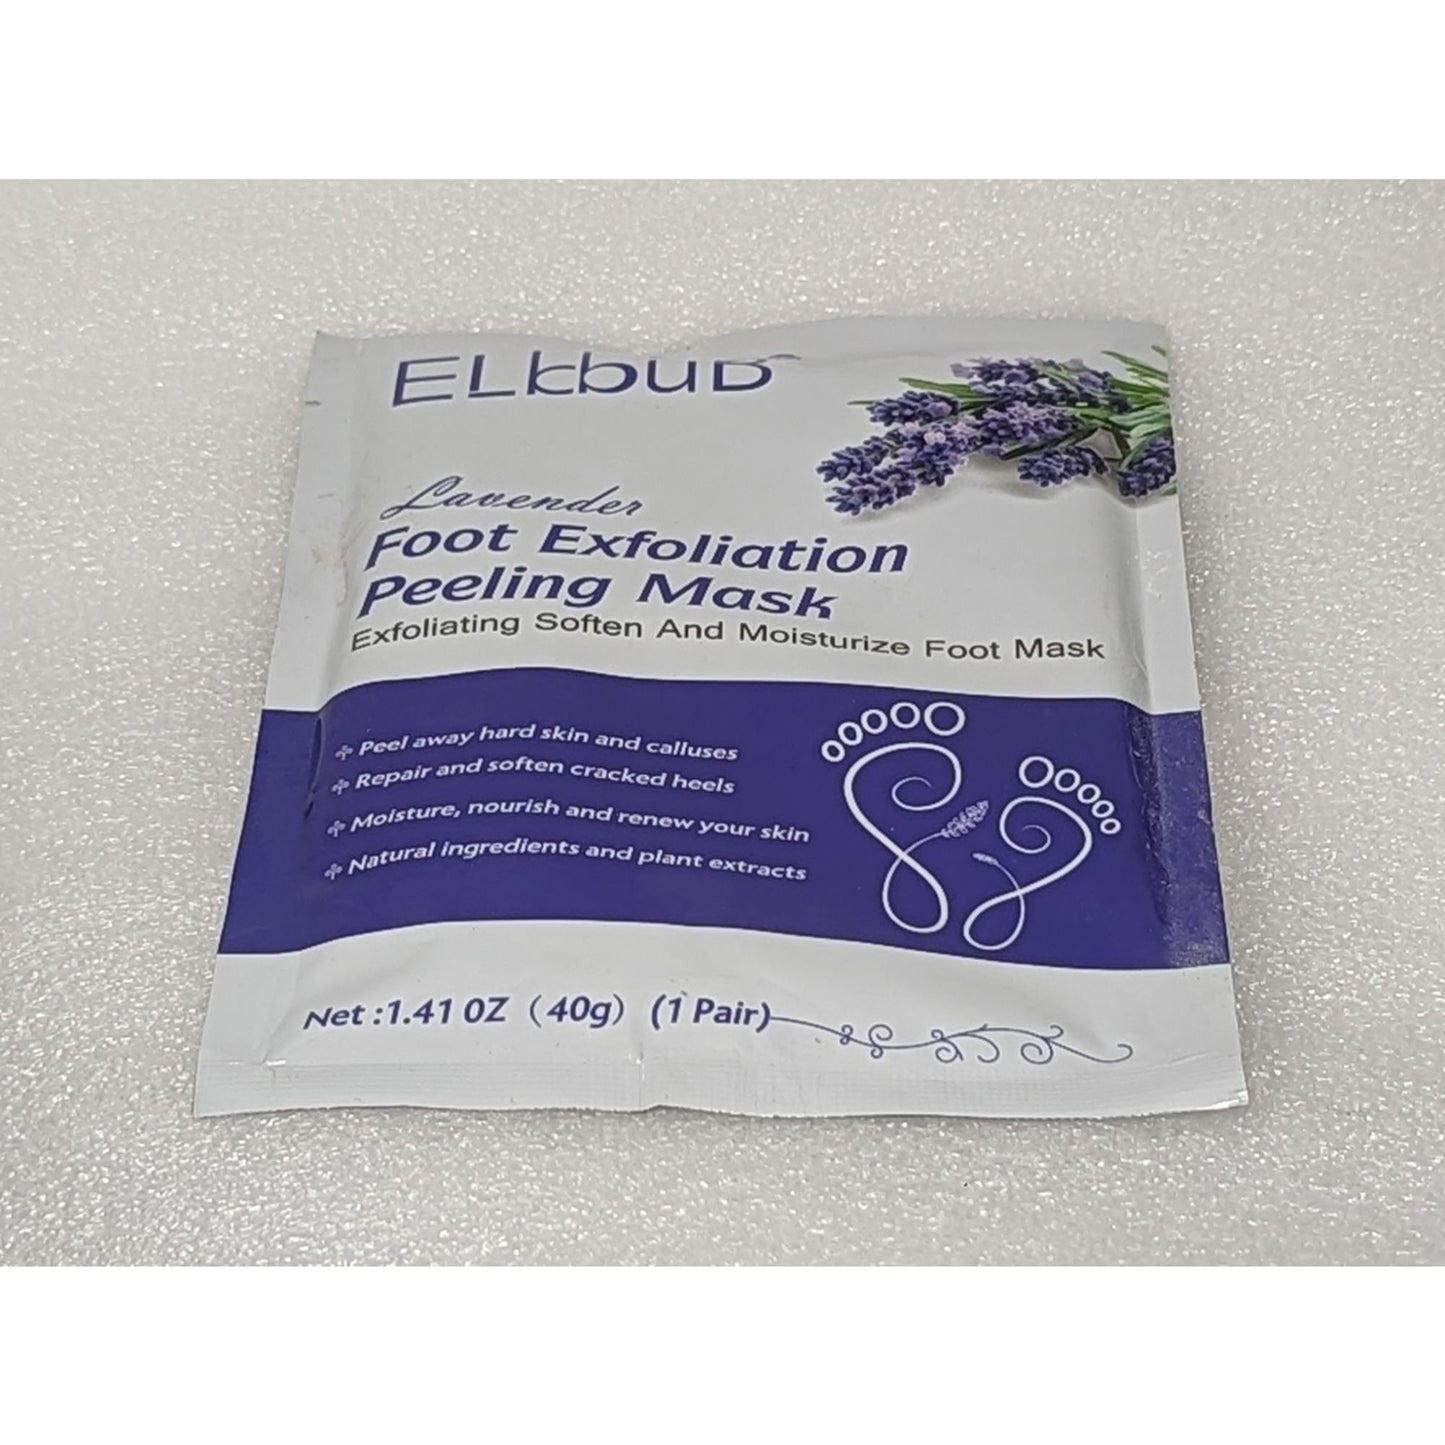 Ellbub Lavender Foot Exfoliation Peeling Mask 1.41 oz